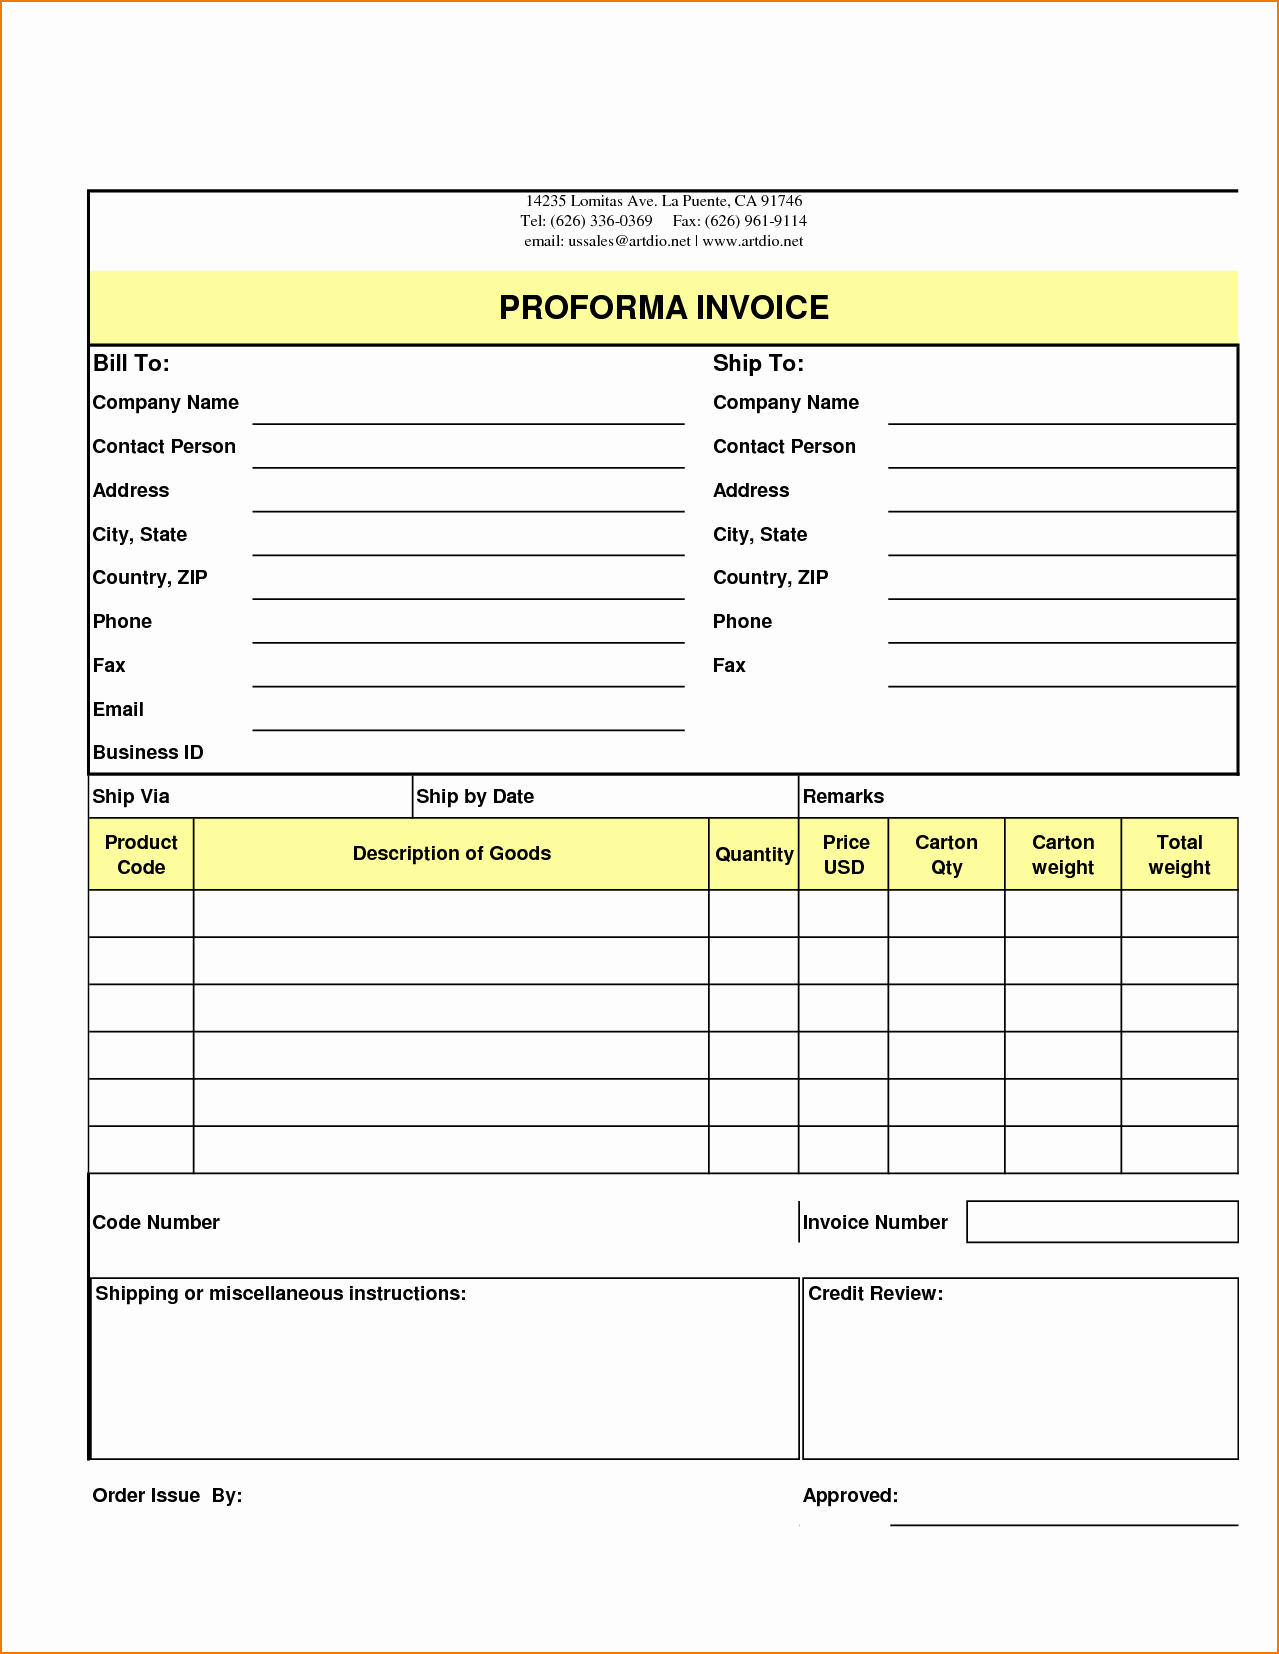 Order form Template Excel Best Of 5 order form Template Excel